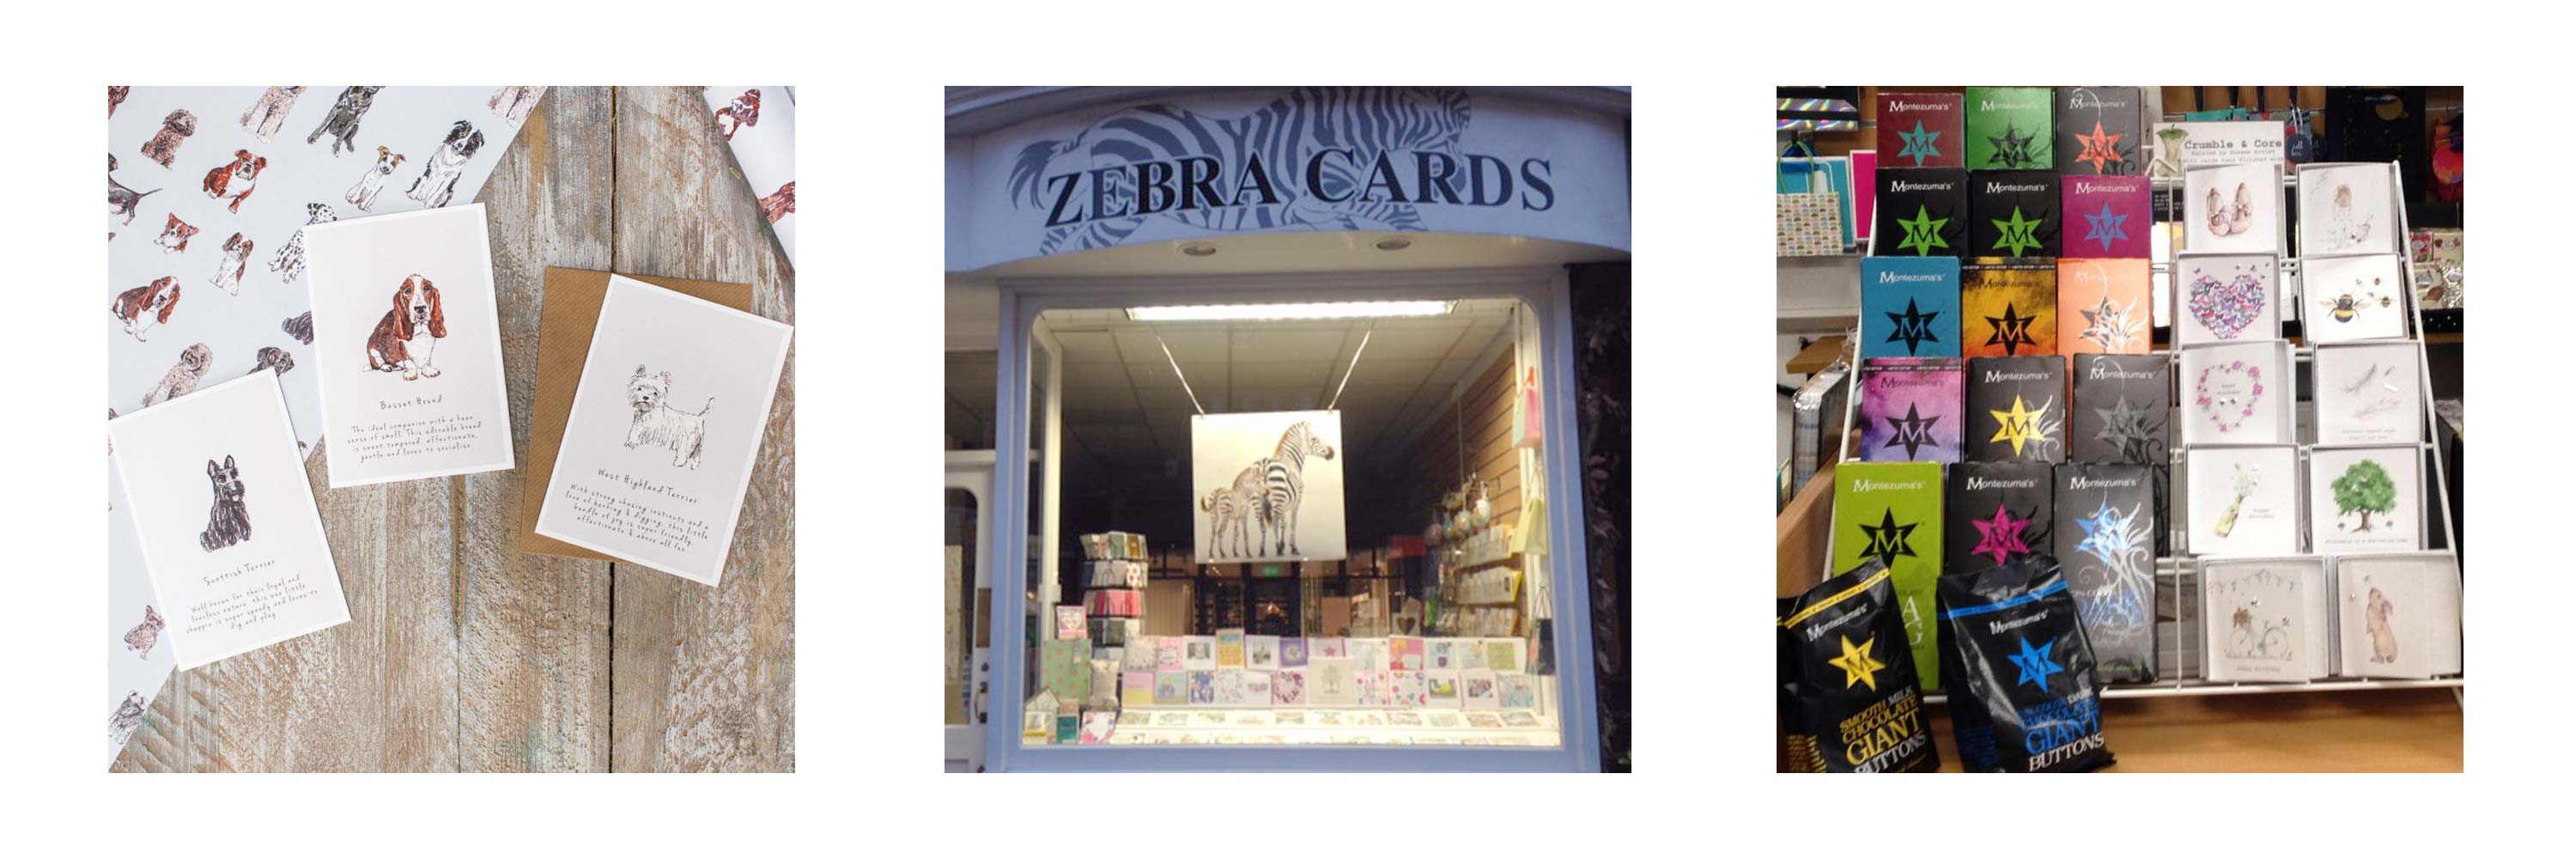 Zebra Cards in Tunbridge Wells